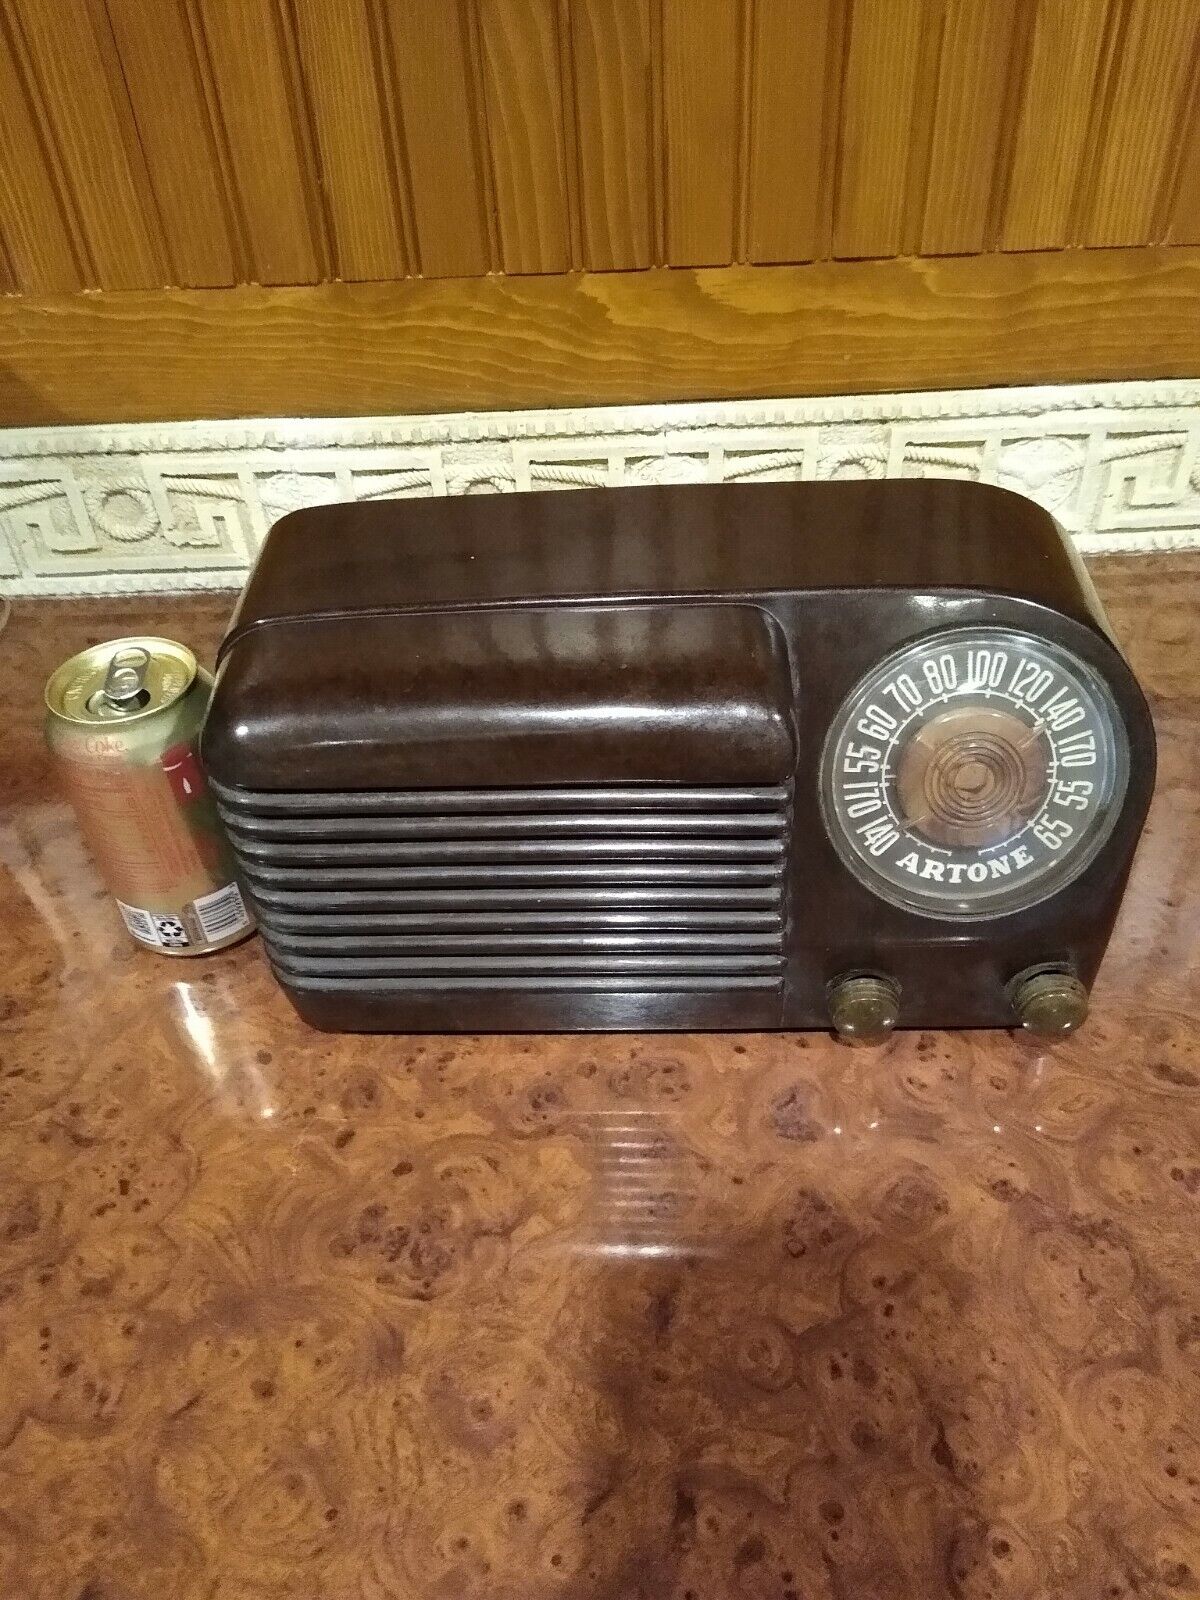 Vintage Artone AM bakelite tube radio Model R-1046